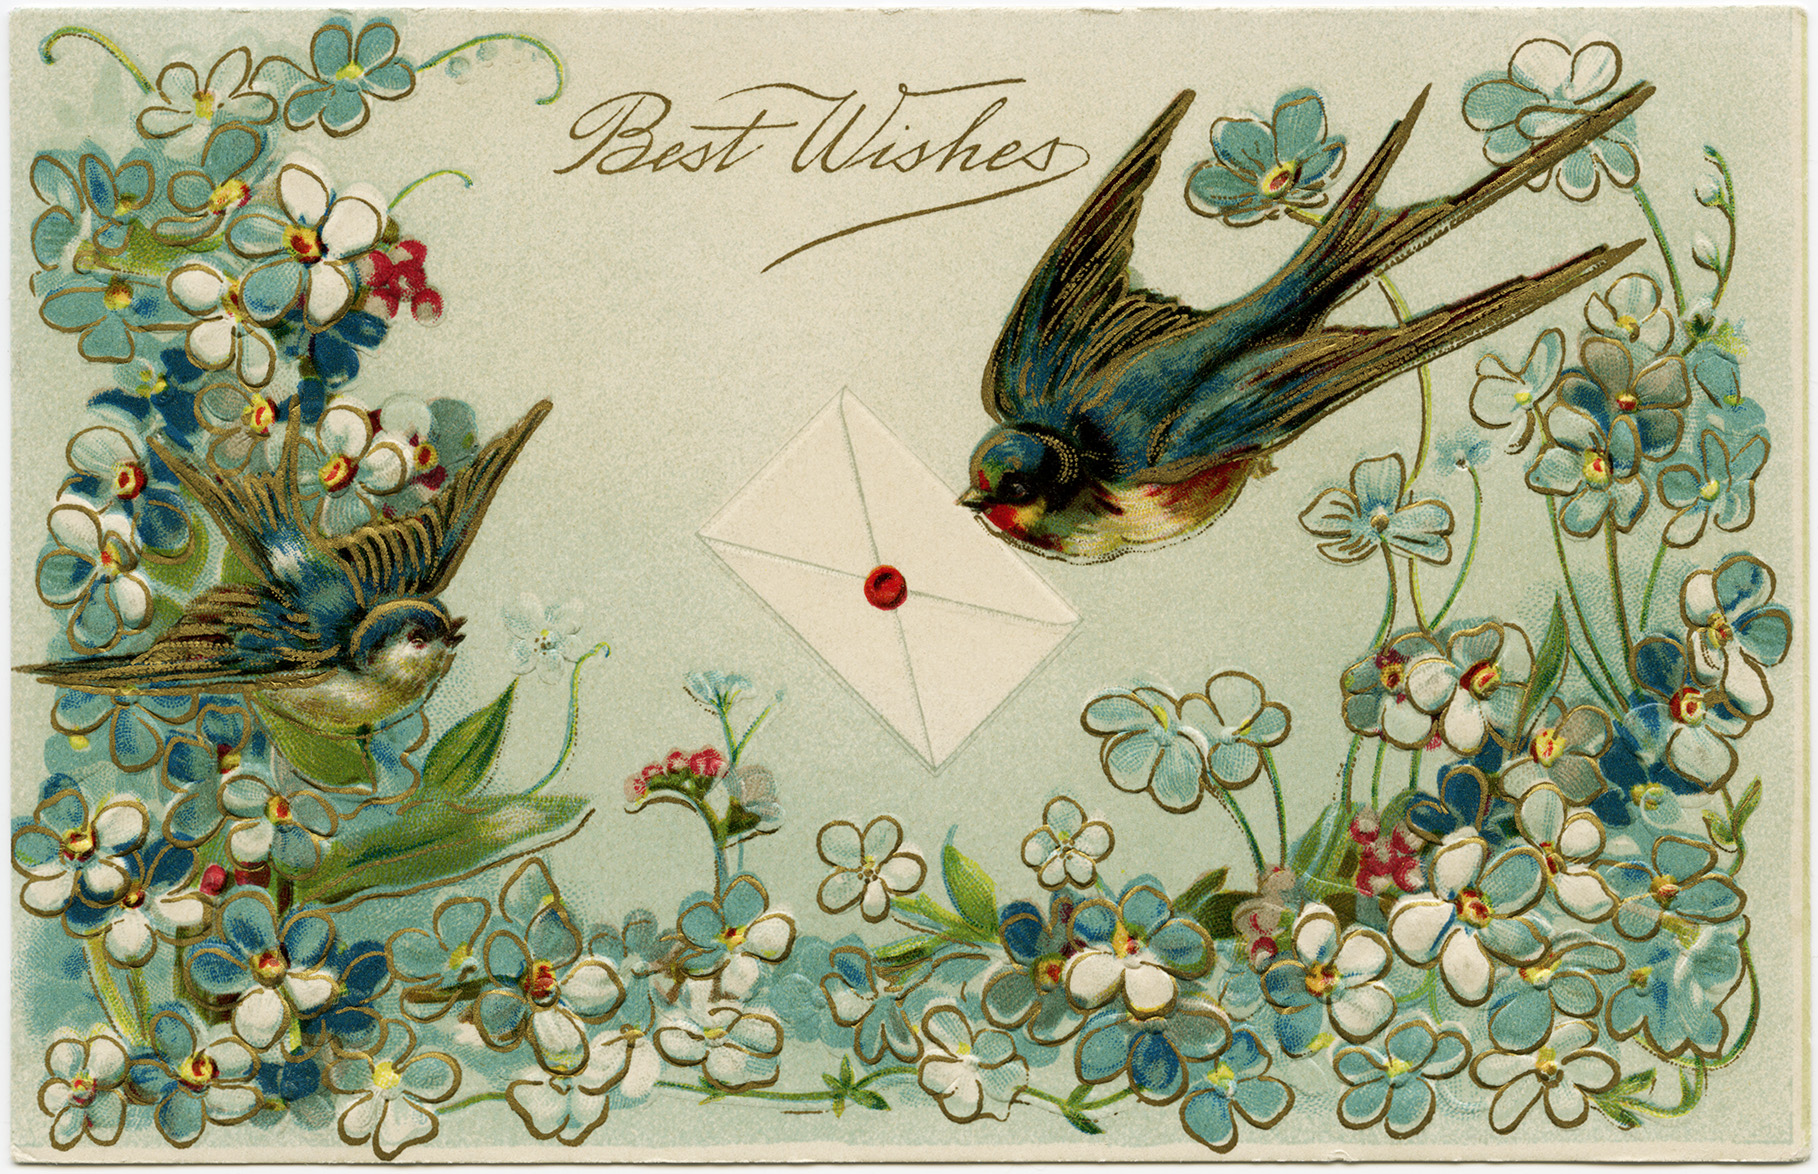 vintage bird postcard, antique floral postcard image, old fashioned best wishes card, free bird flower graphic